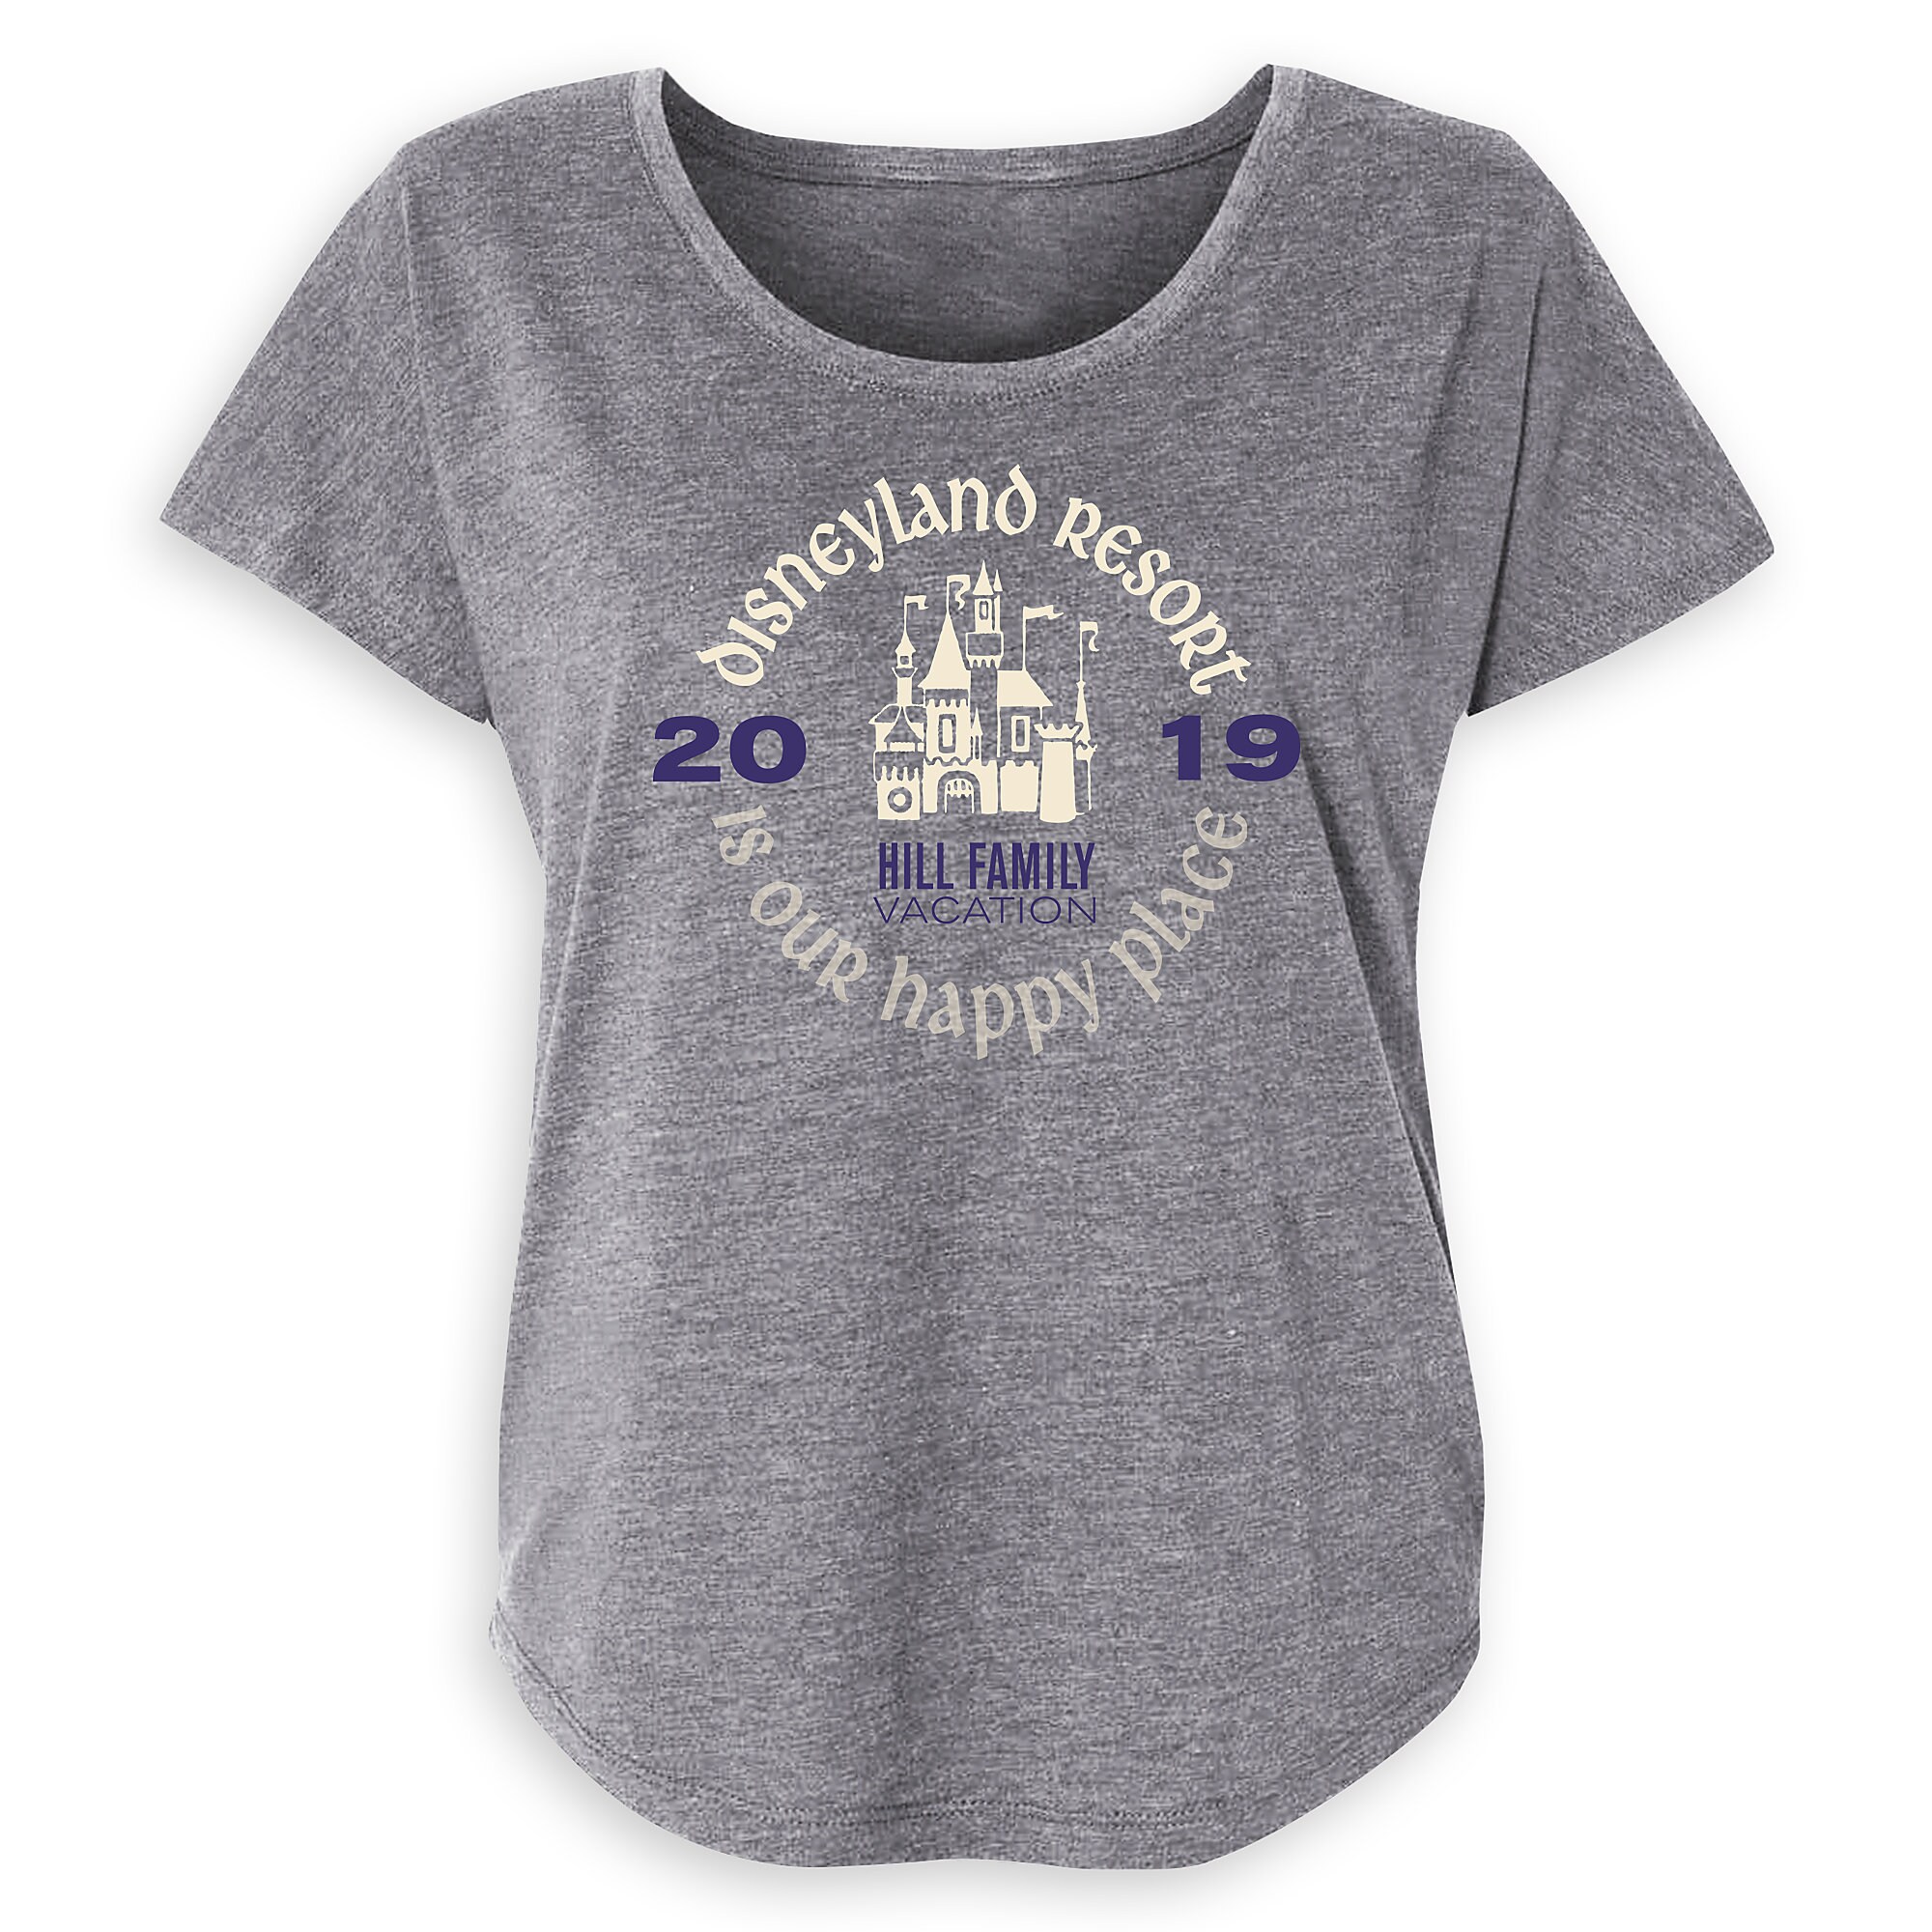 Women's ''Disneyland Resort Is Our Happy Place'' Family Vacation T-Shirt - Disneyland Resort - 2019 - Customized